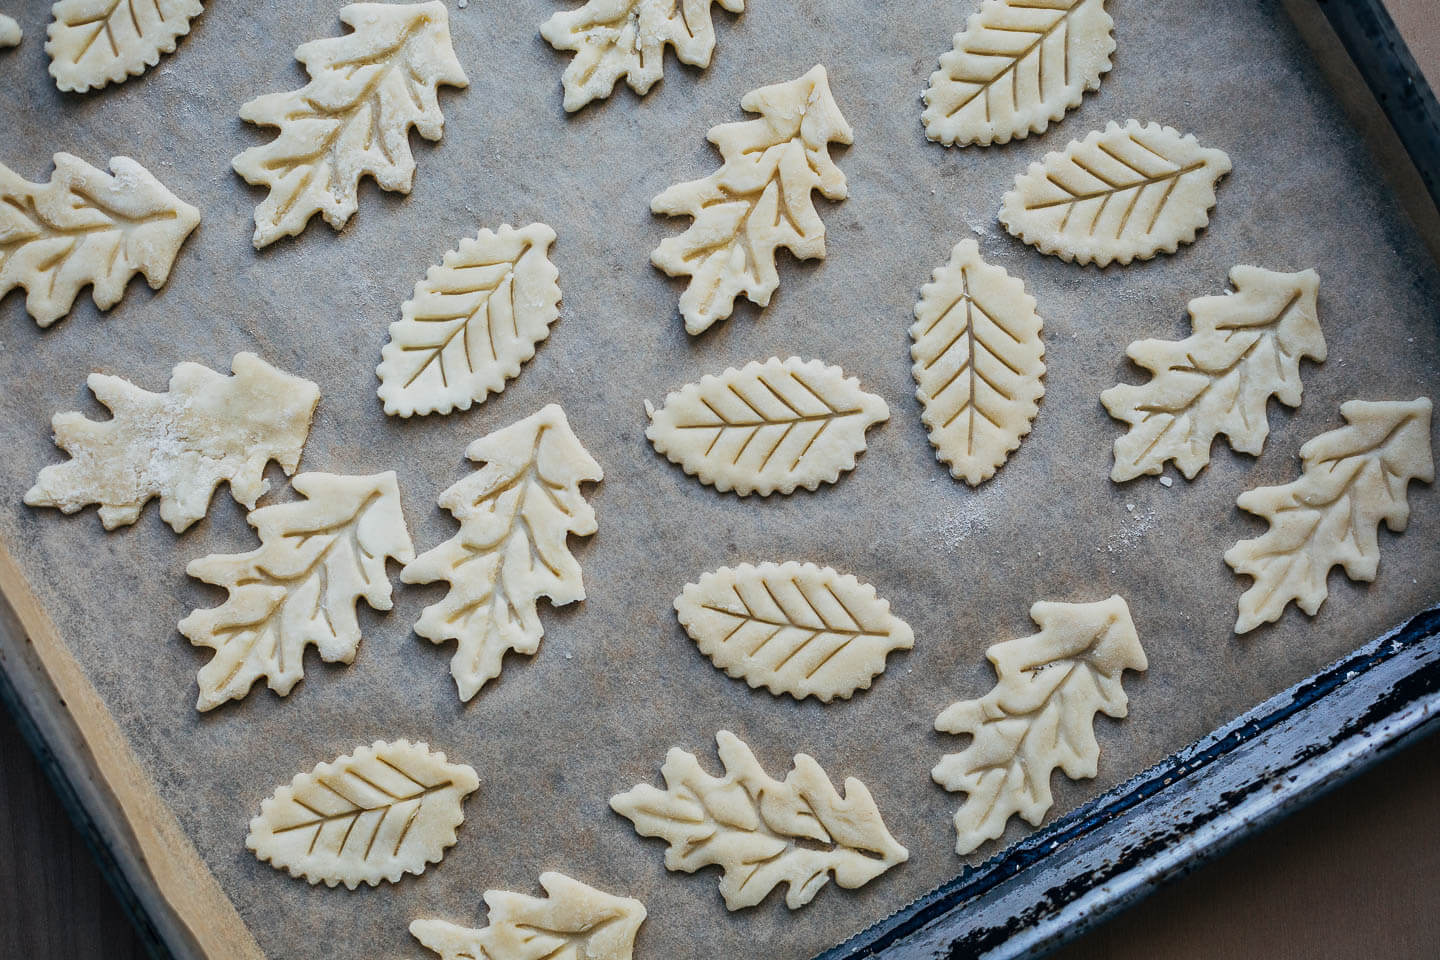 Decorative leaf cutouts on a baking sheet